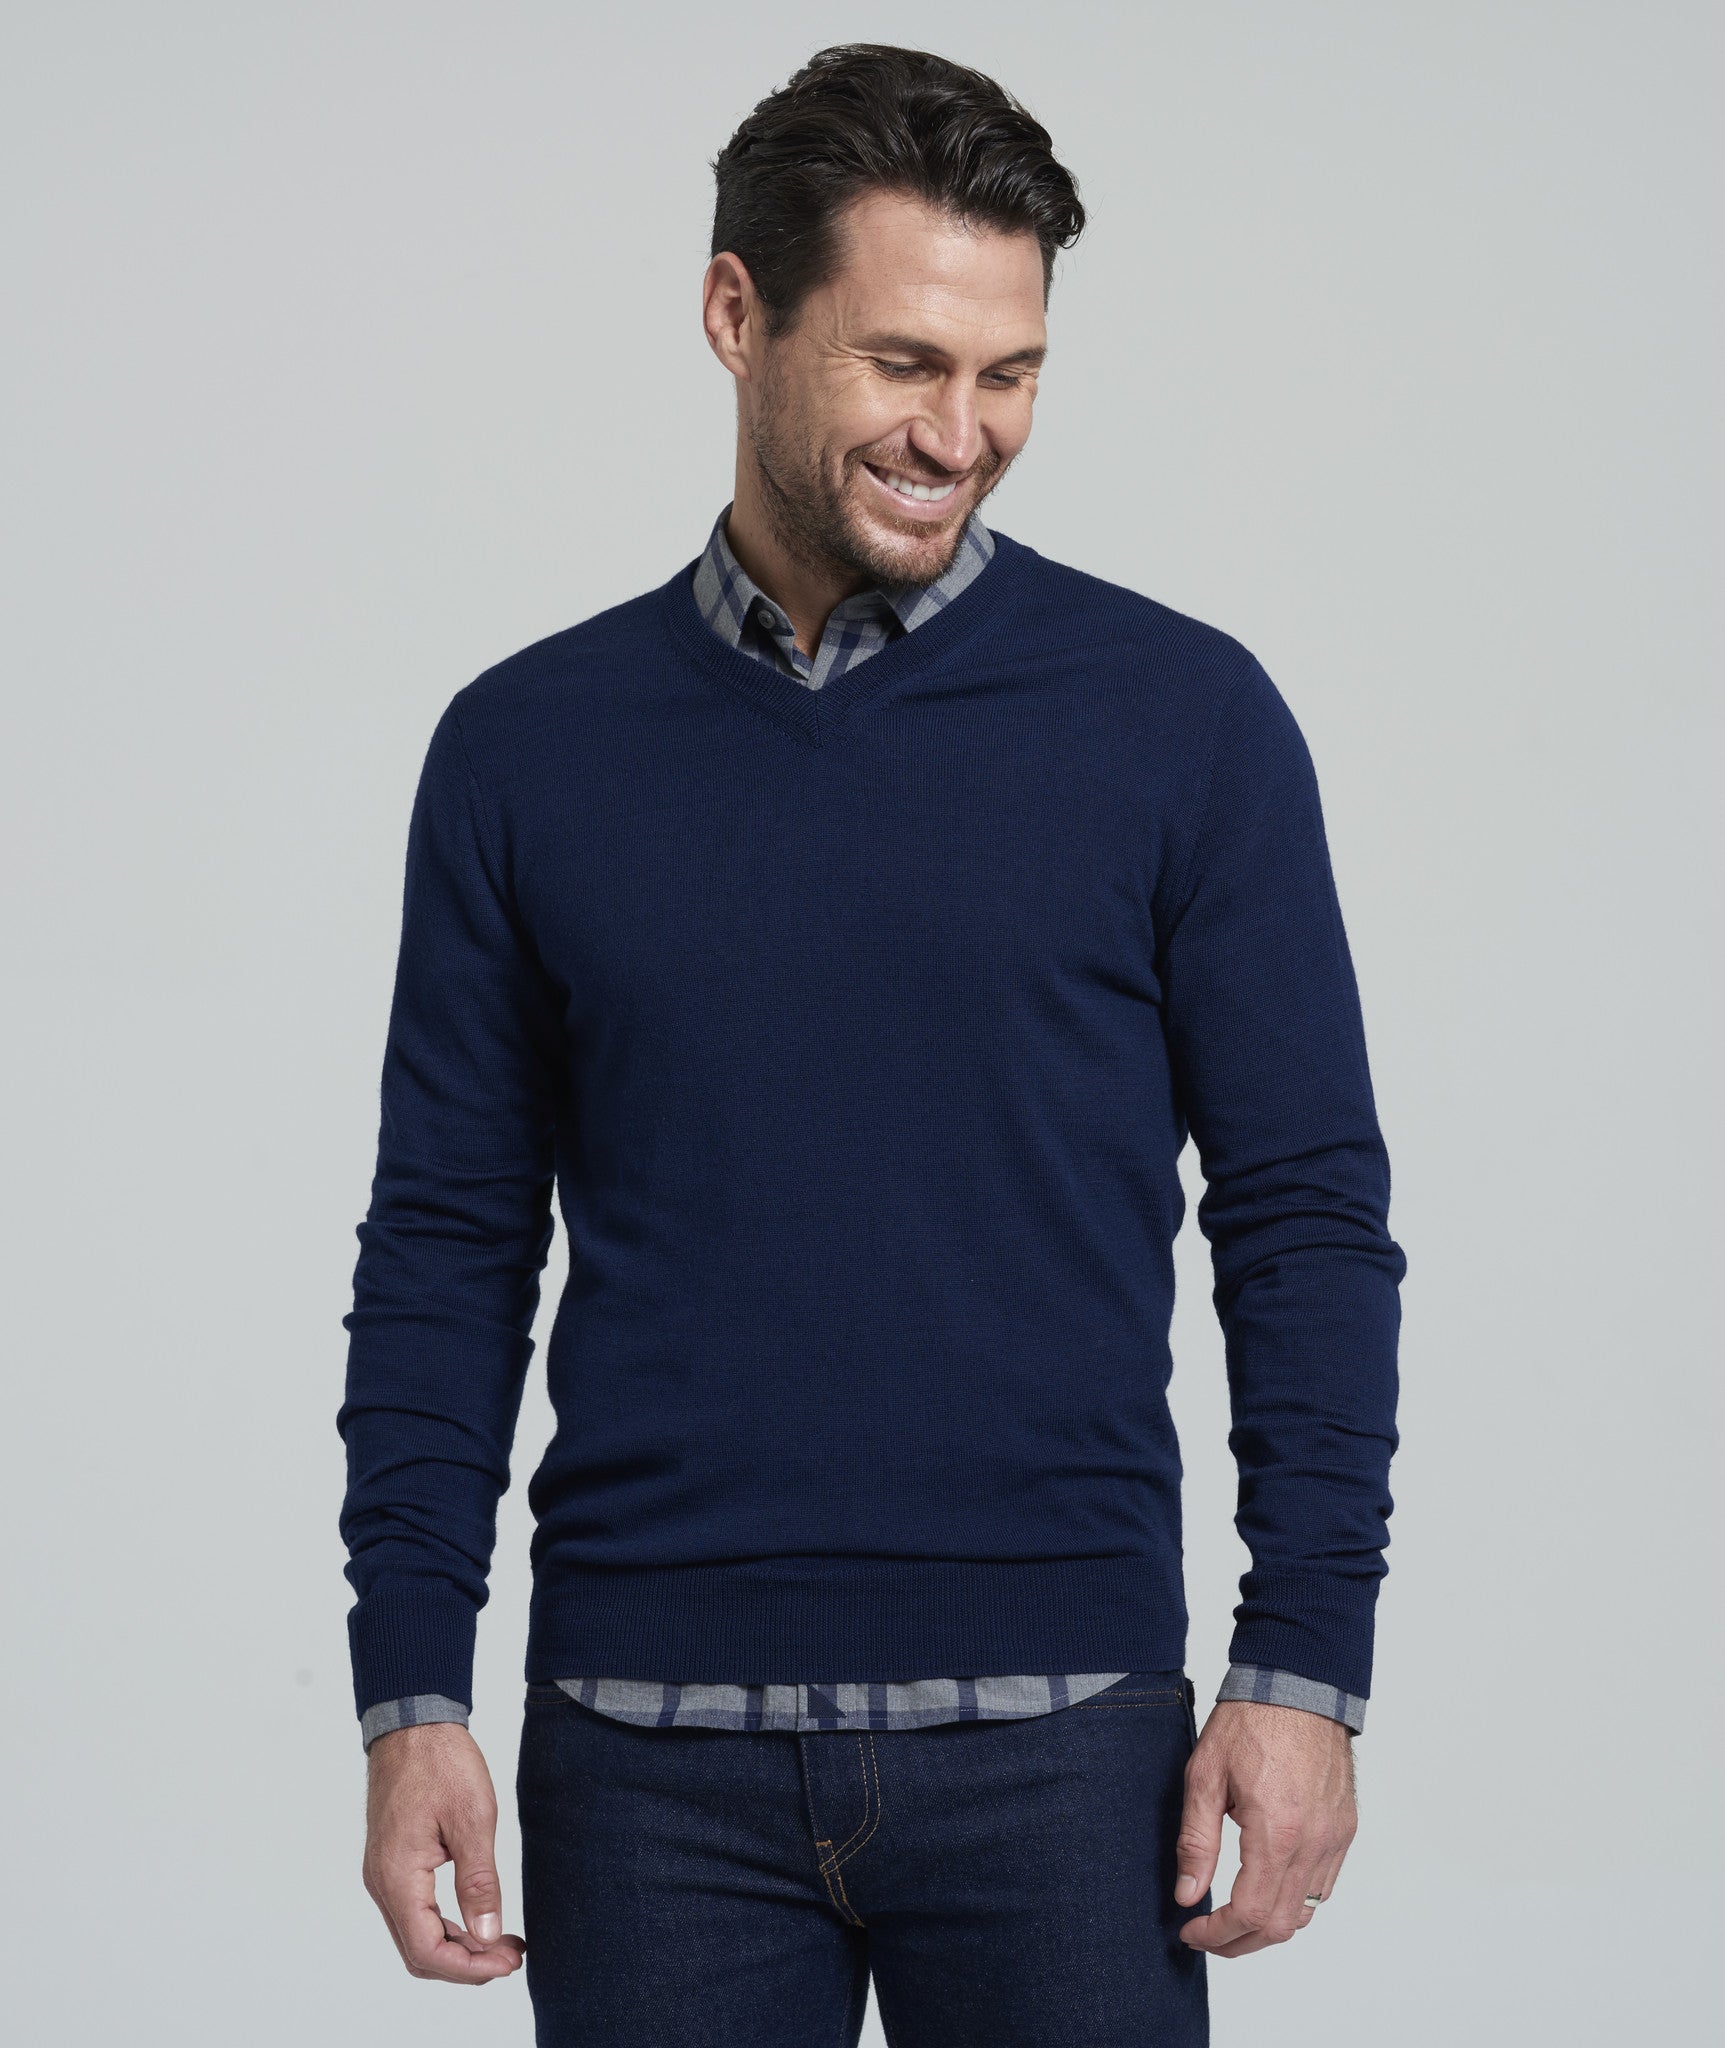 Image result for v neck sweater and dress shirt